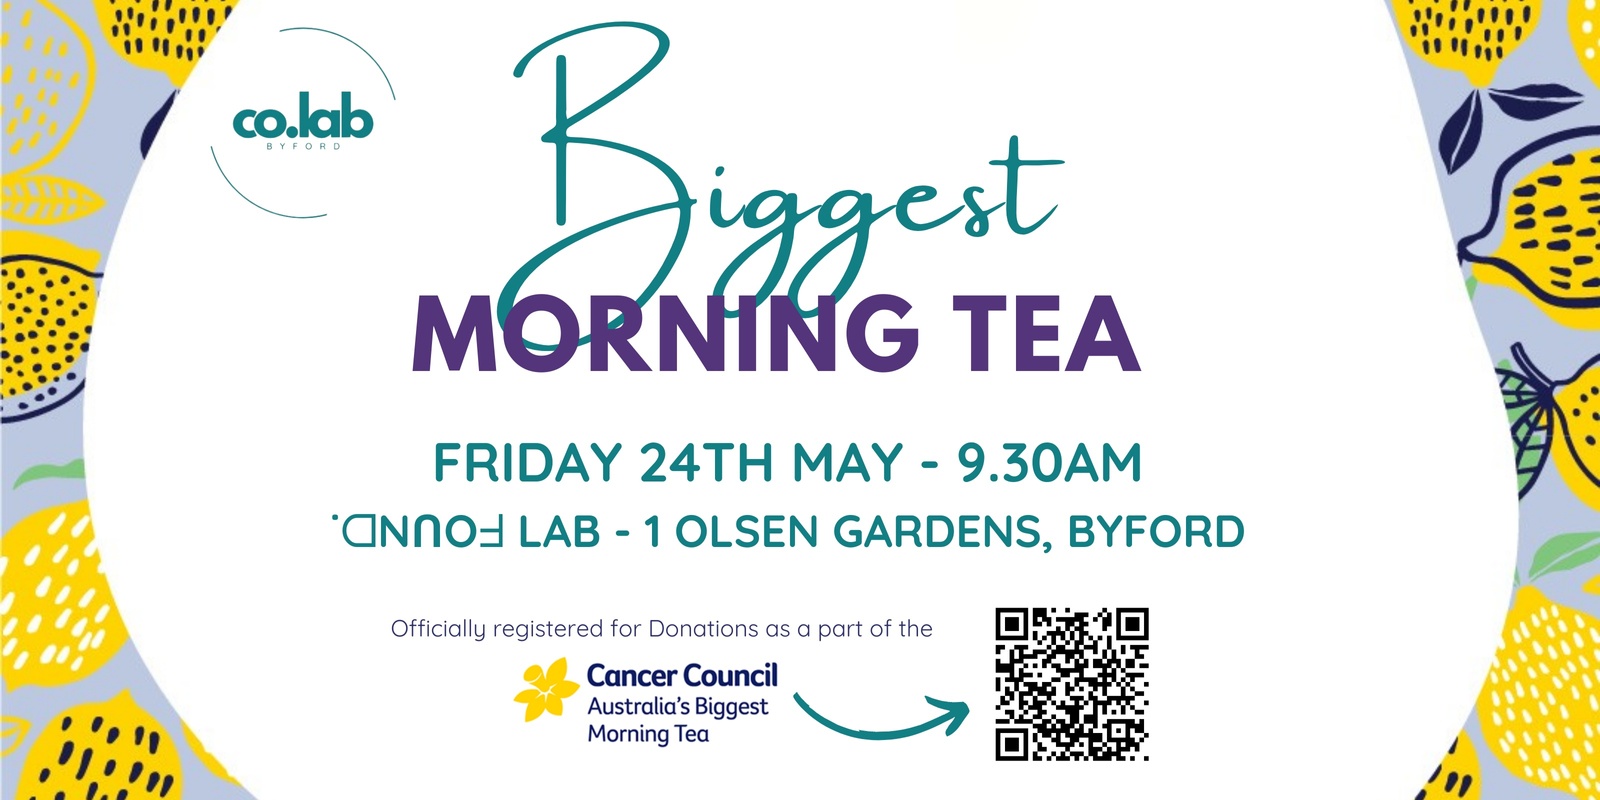 Banner image for Byford Co.Lab Biggest Morning Tea